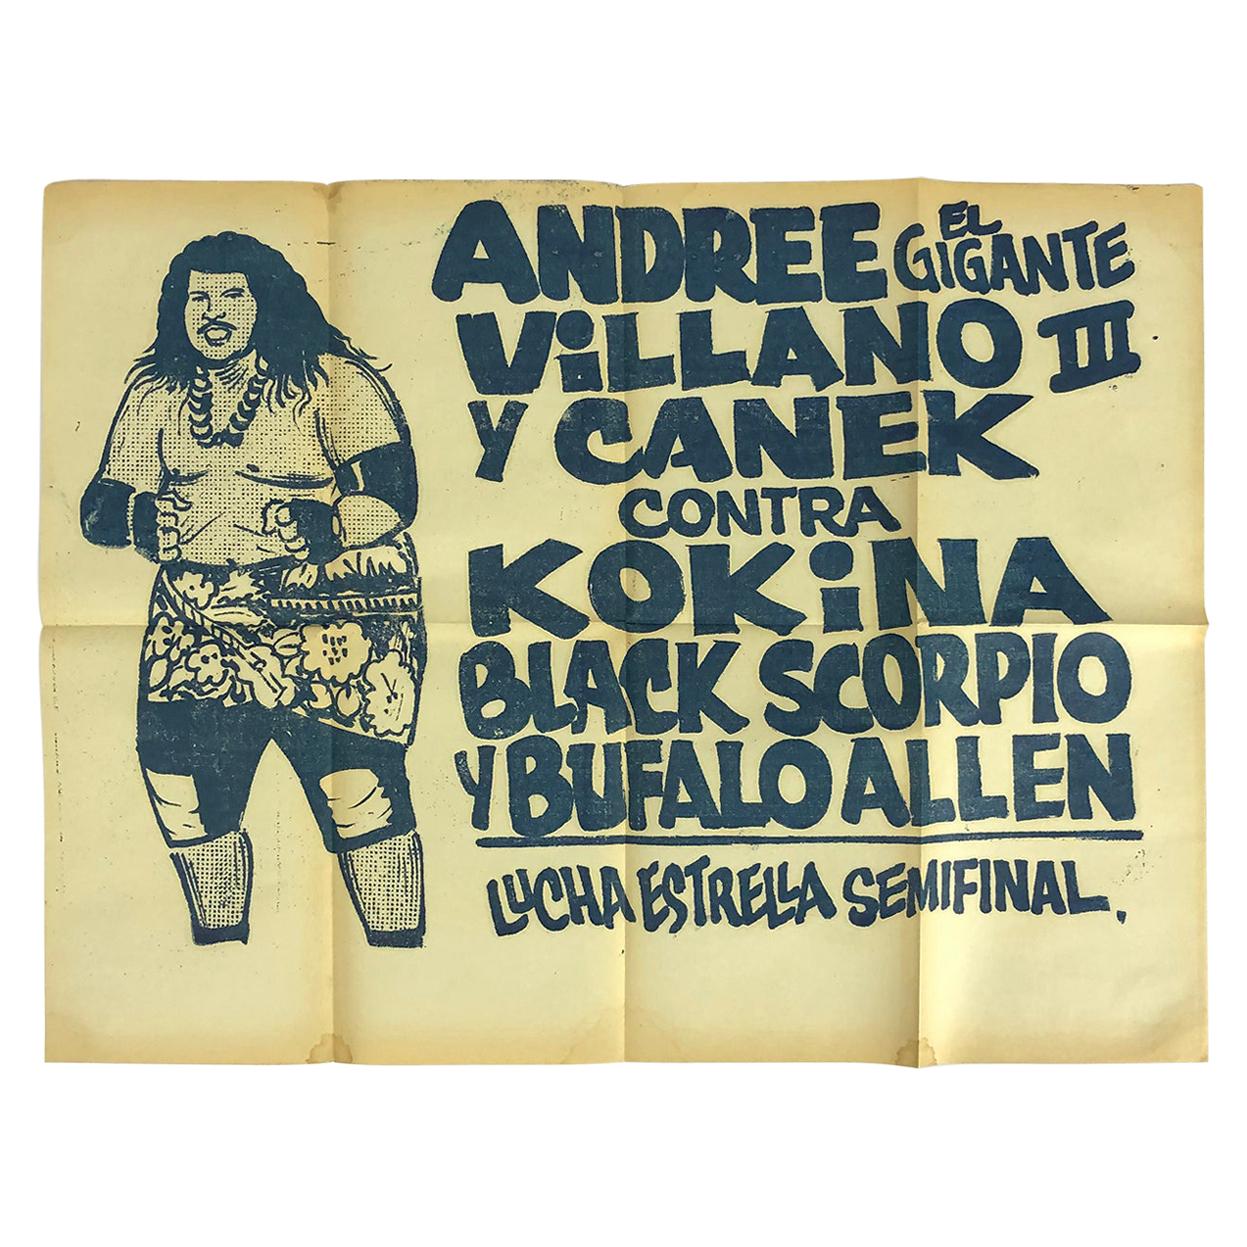 Original Mexican Wrestling Poster "Kokina"